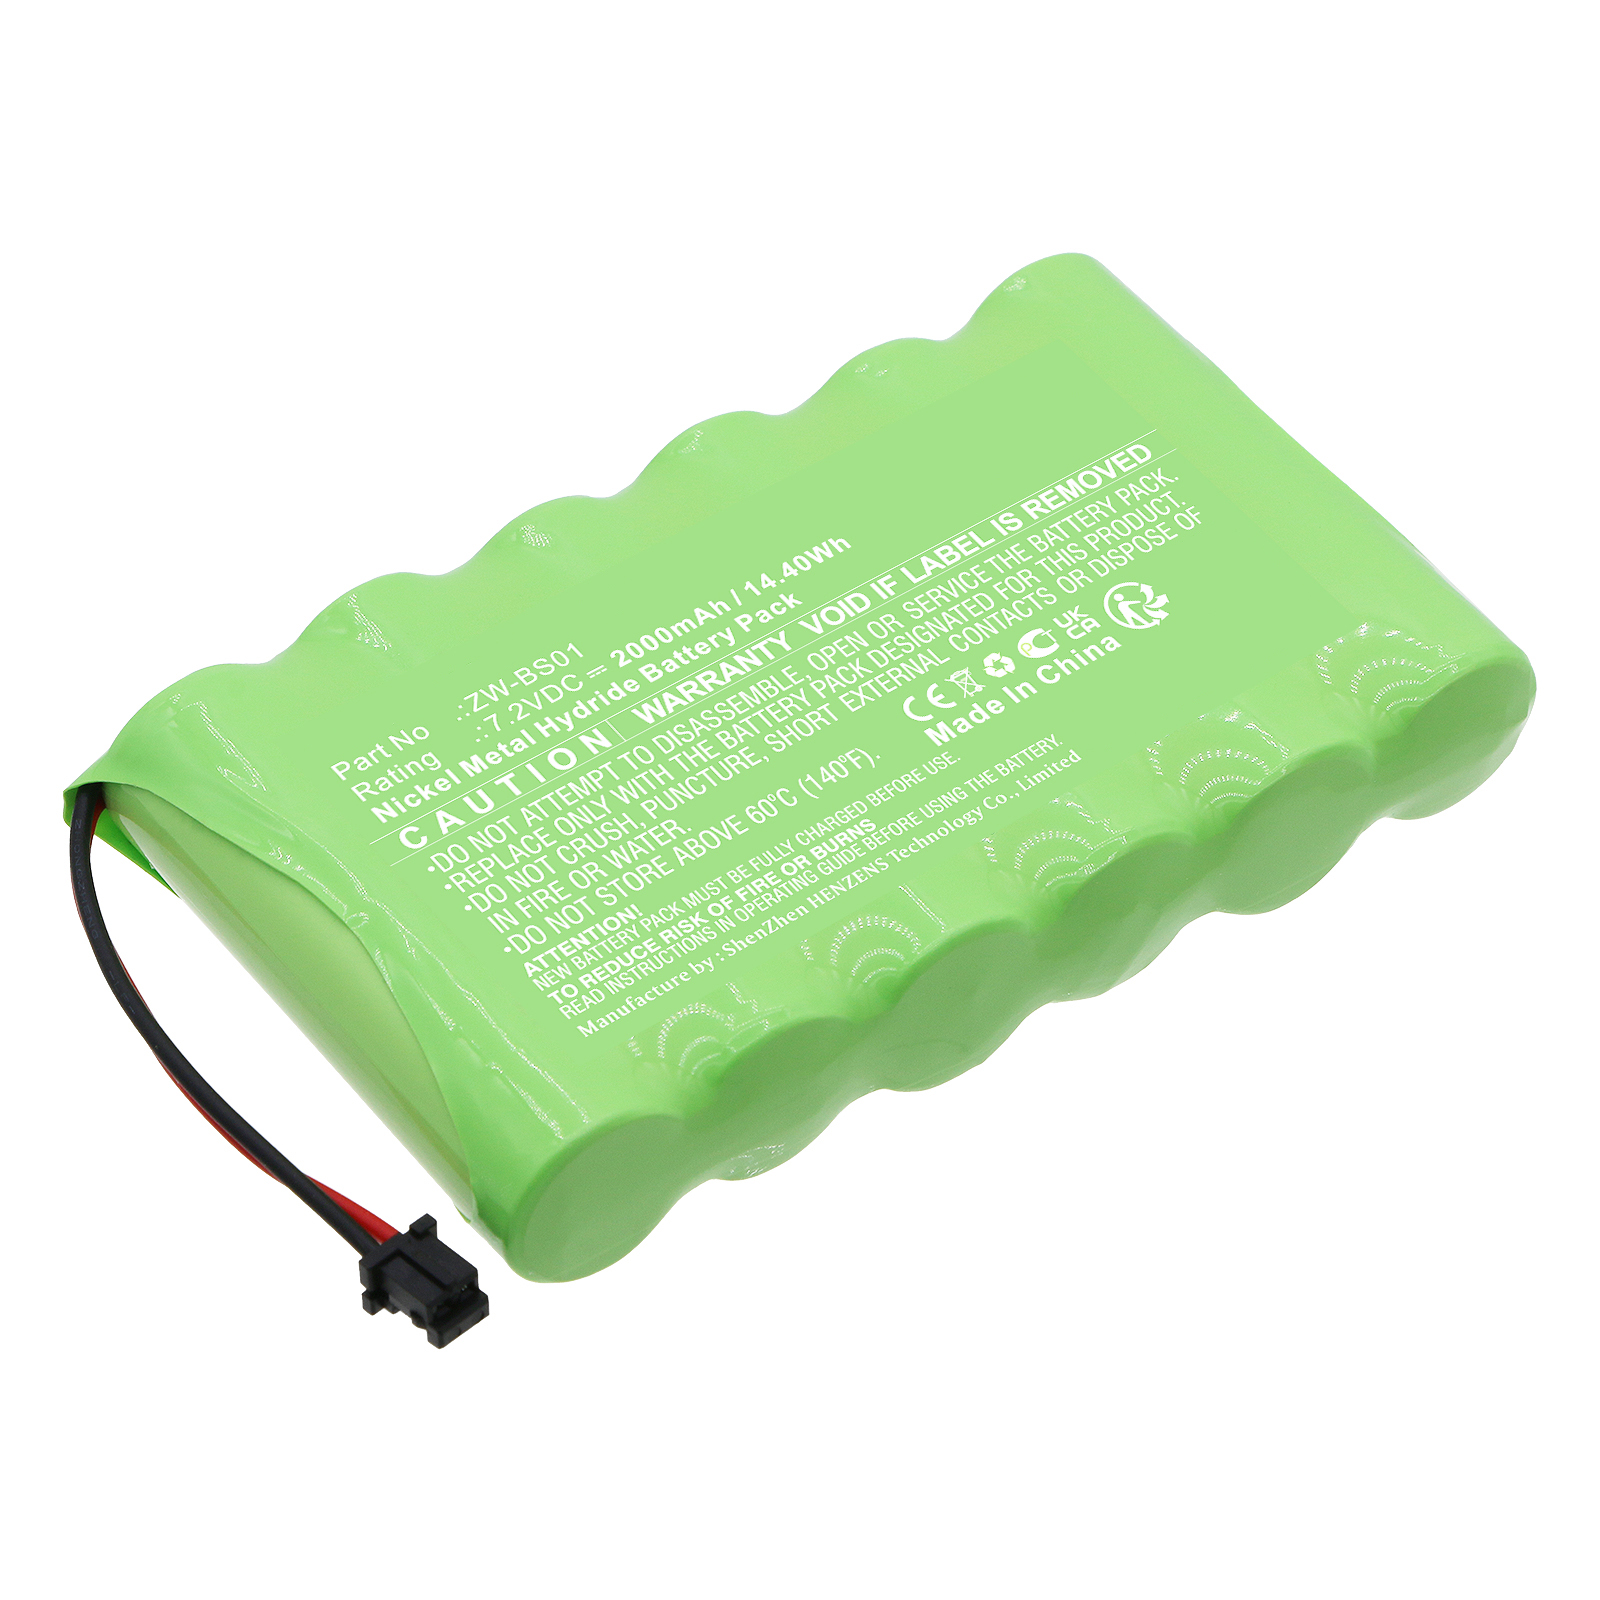 Synergy Digital Alarm System Battery, Compatible with CaddX ZW-BS01 Alarm System Battery (Ni-MH, 7.2V, 2000mAh)